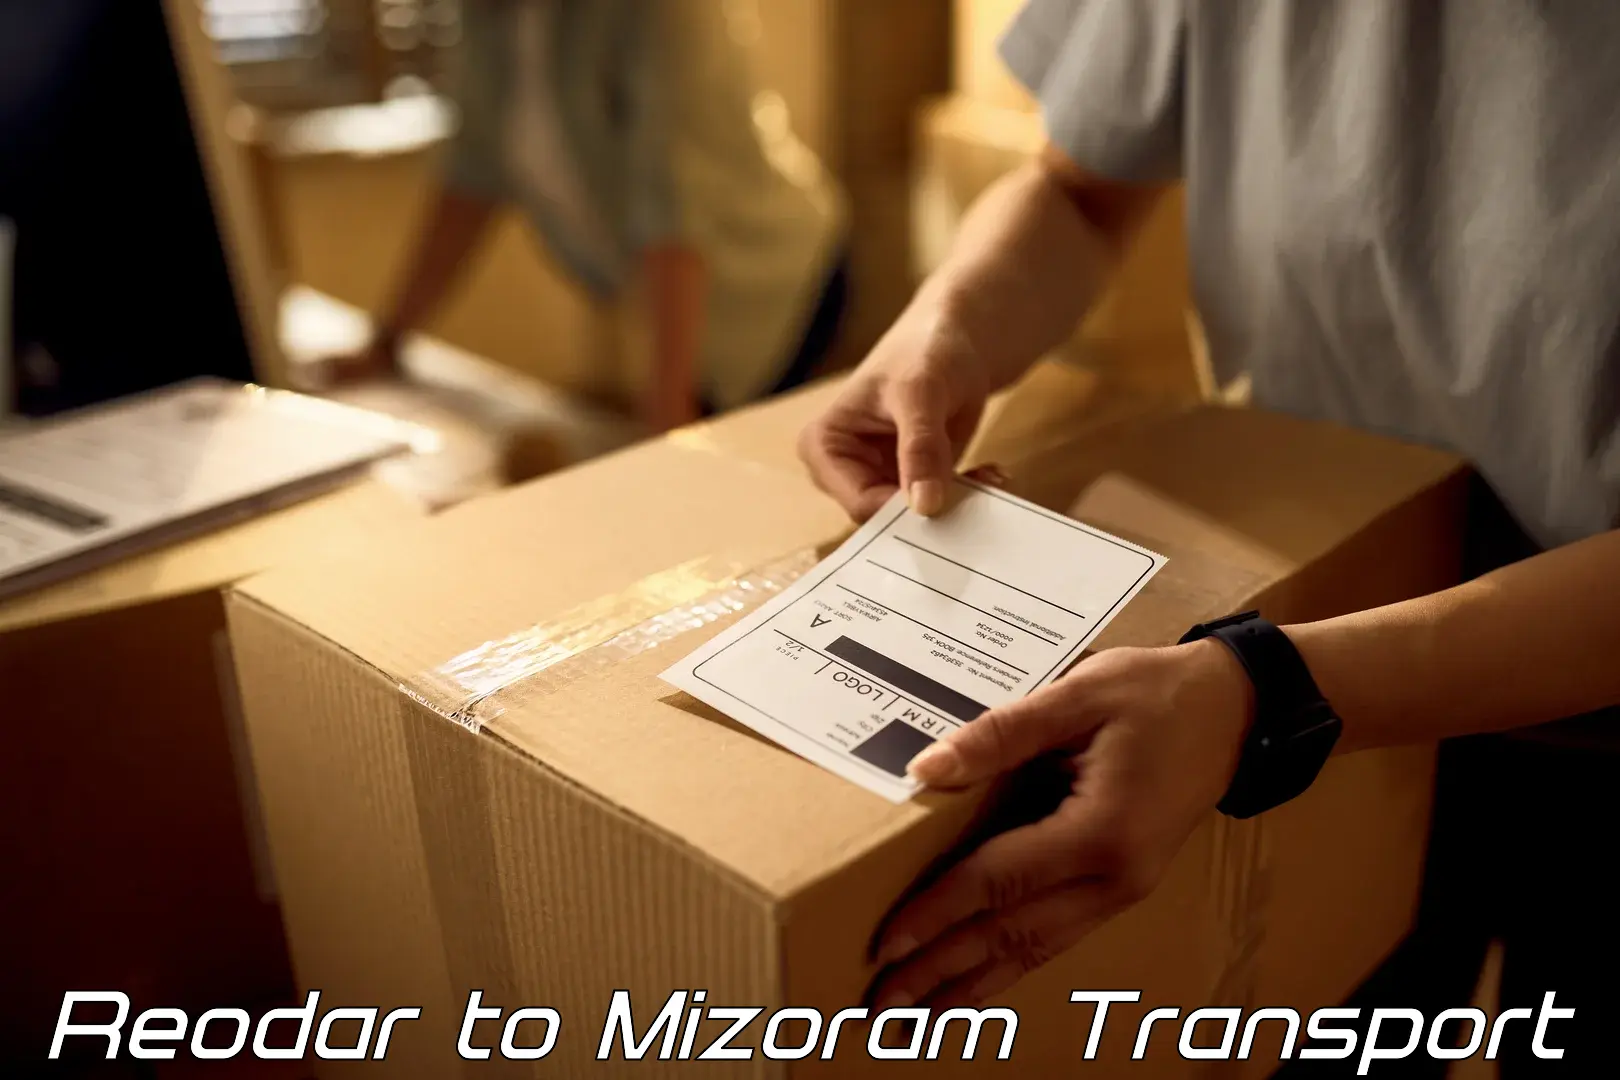 Commercial transport service Reodar to Mizoram